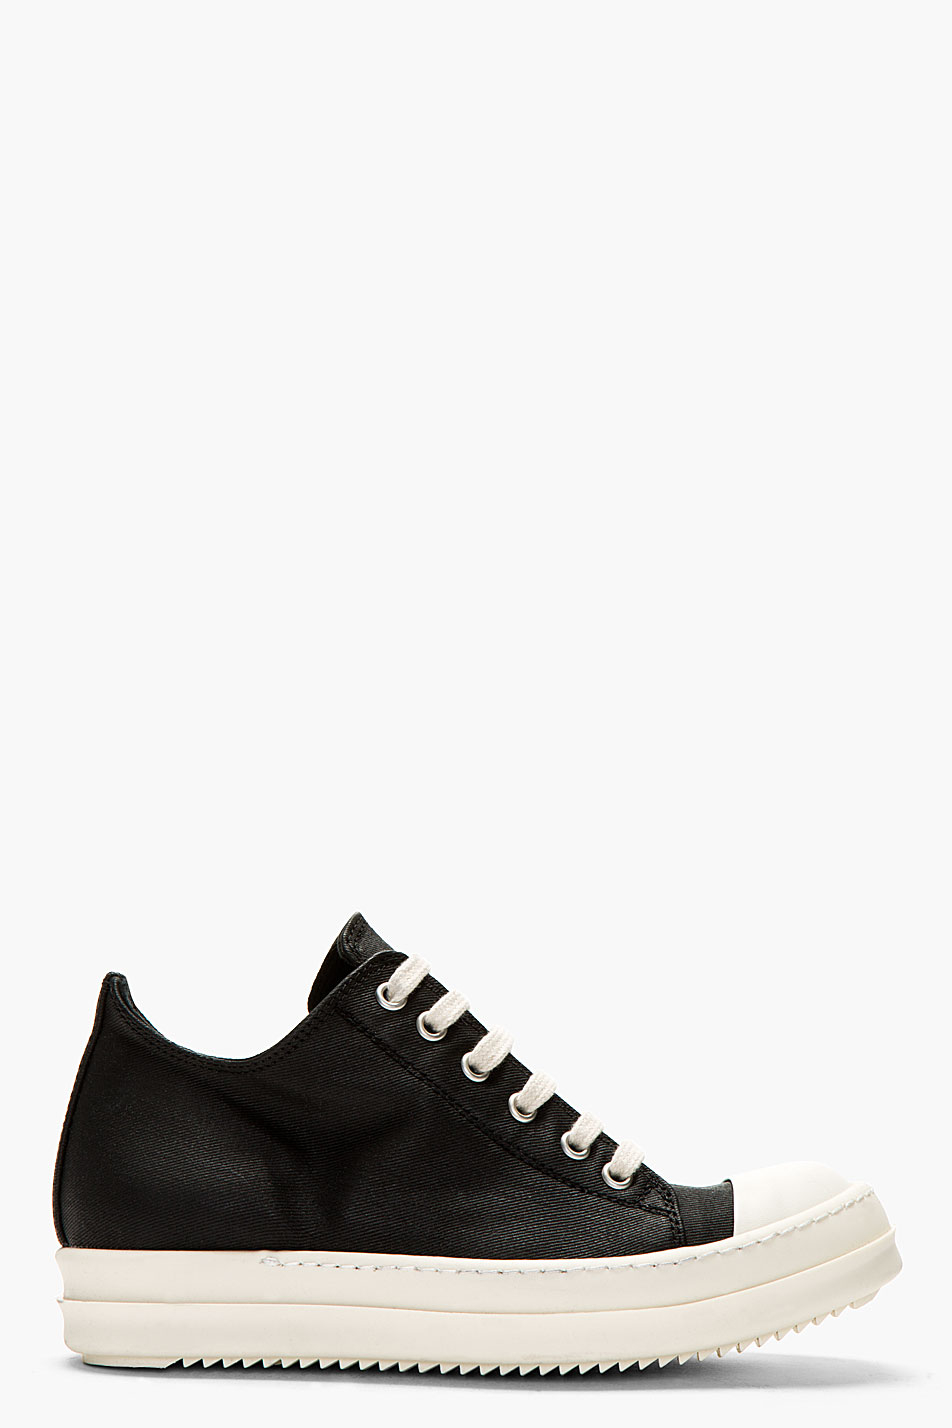 rick-owens-drkshdw-black-black-coated-cotton-low_top-ramones-sneakers-product-1-18603771-2-051106627-normal.jpeg